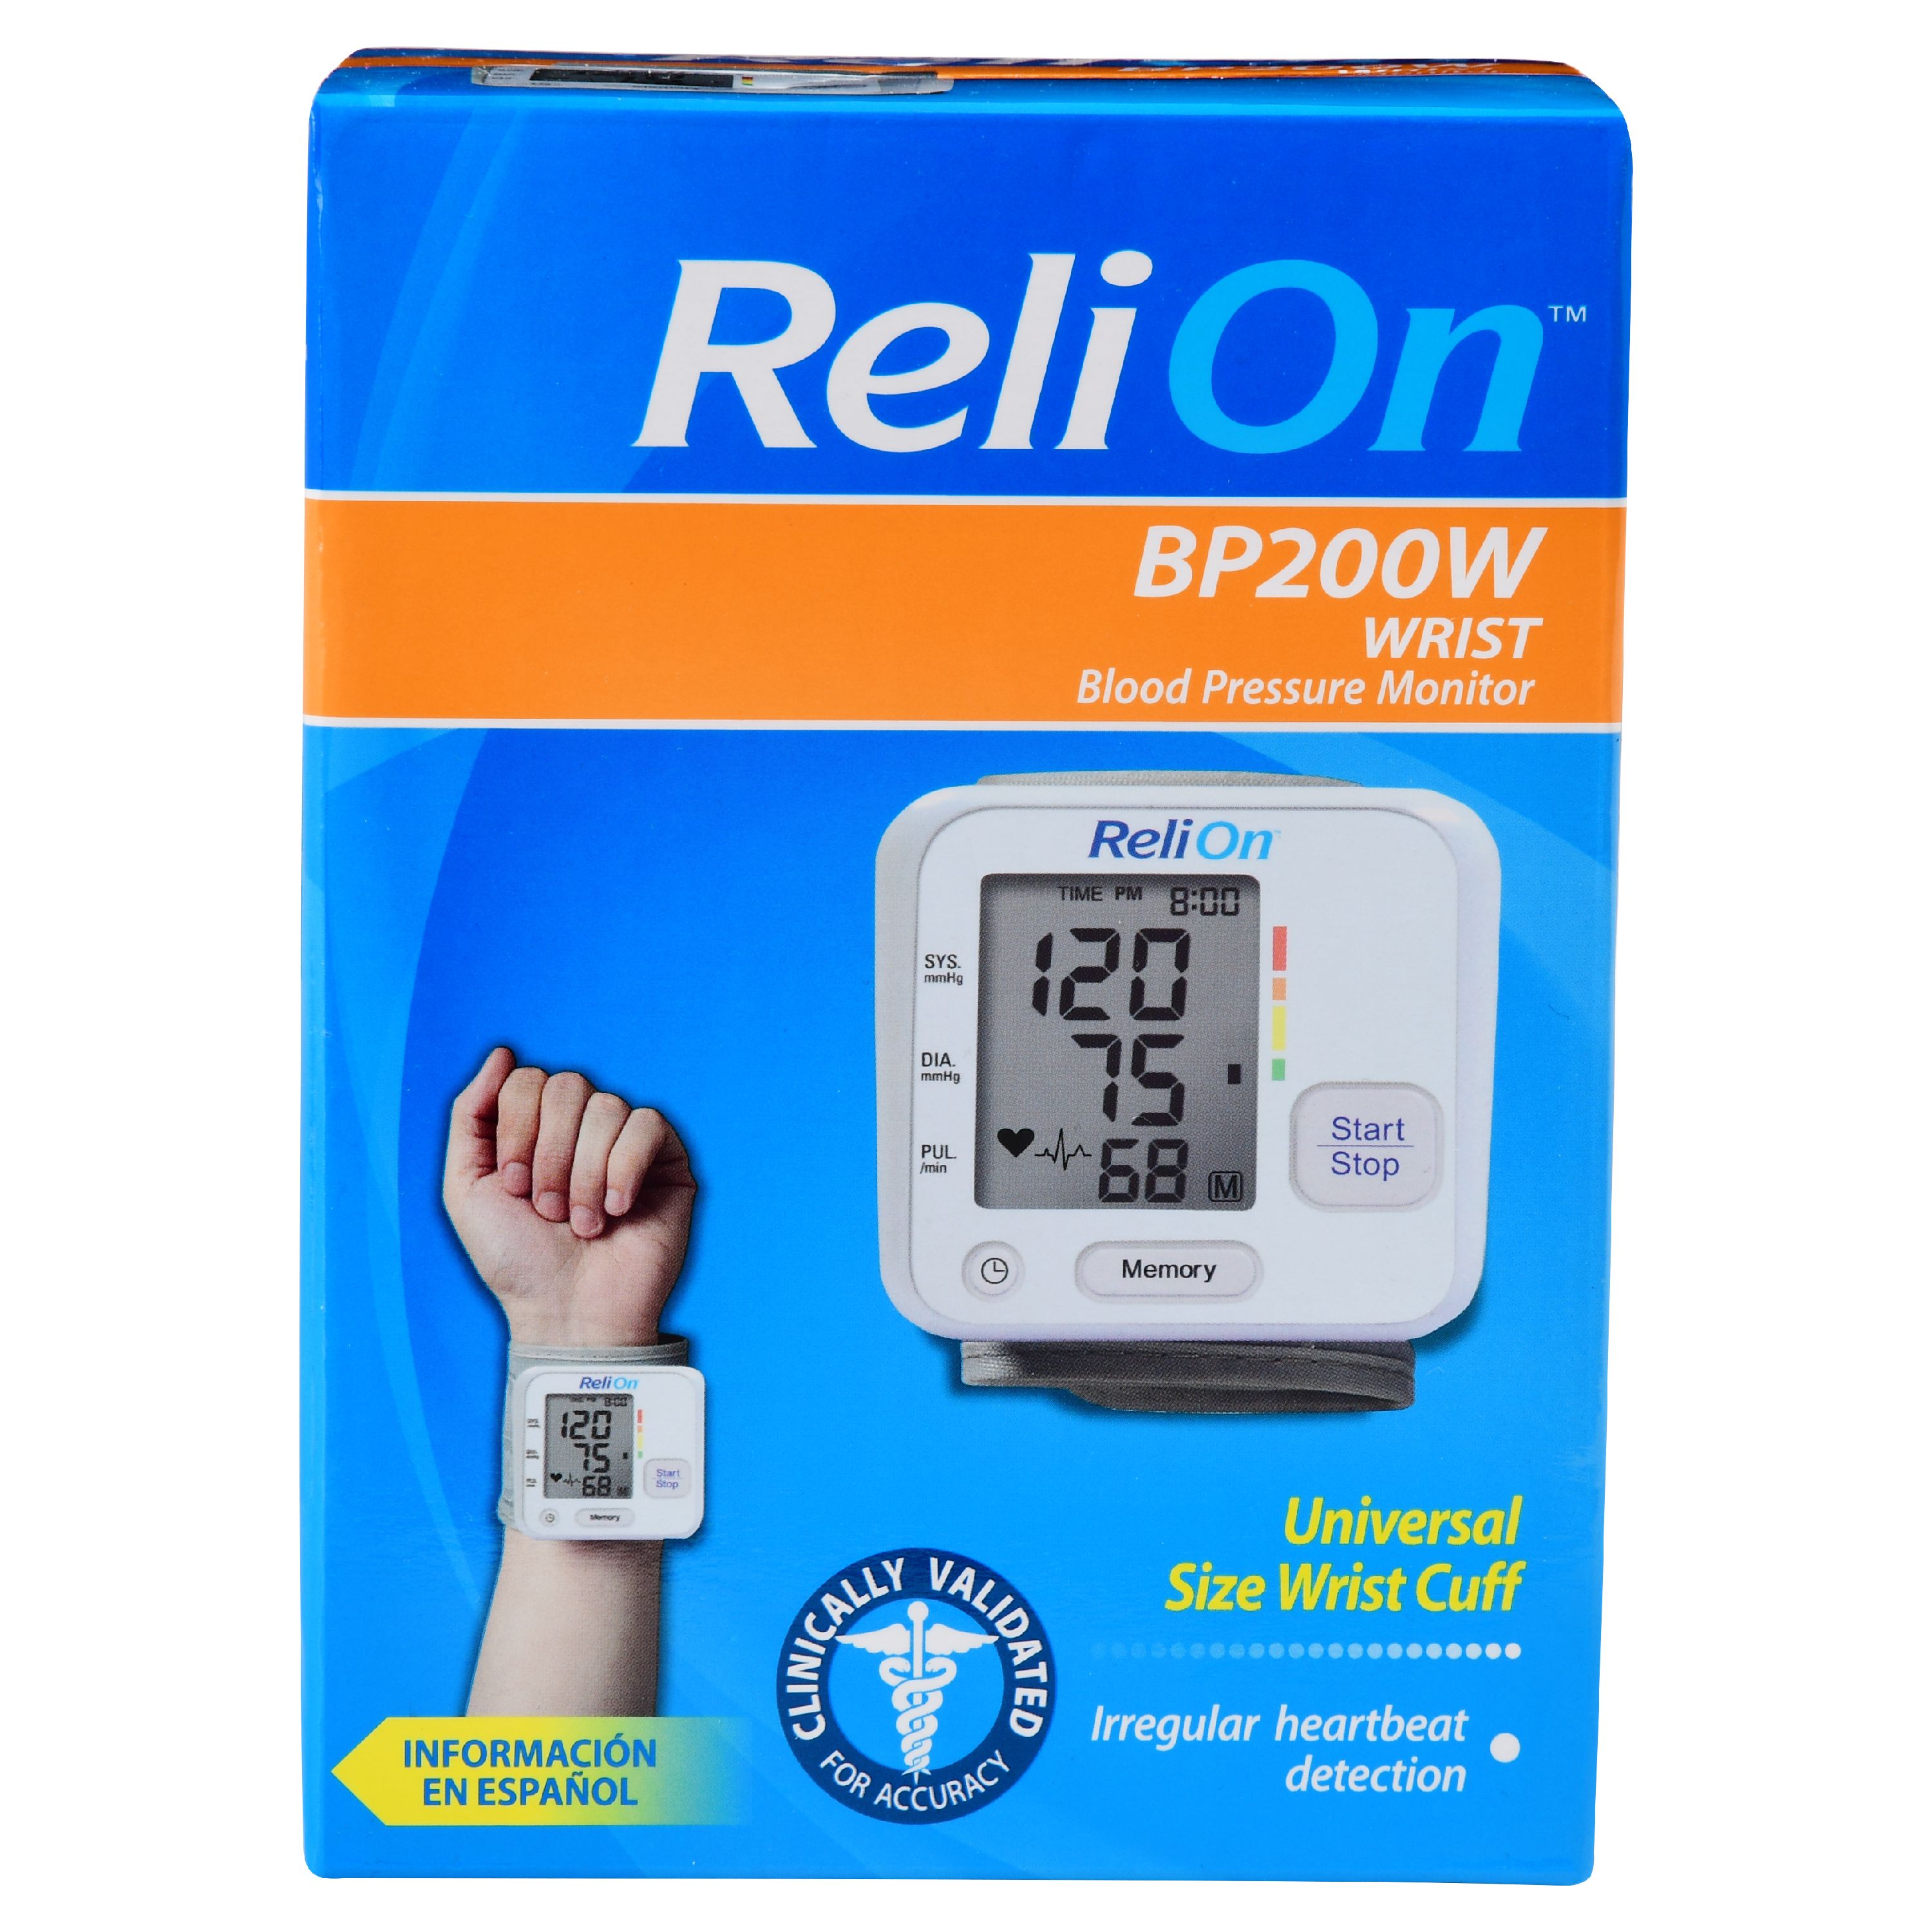 ReliOn BP200W Wrist Blood Pressure Monitor - image 2 of 9